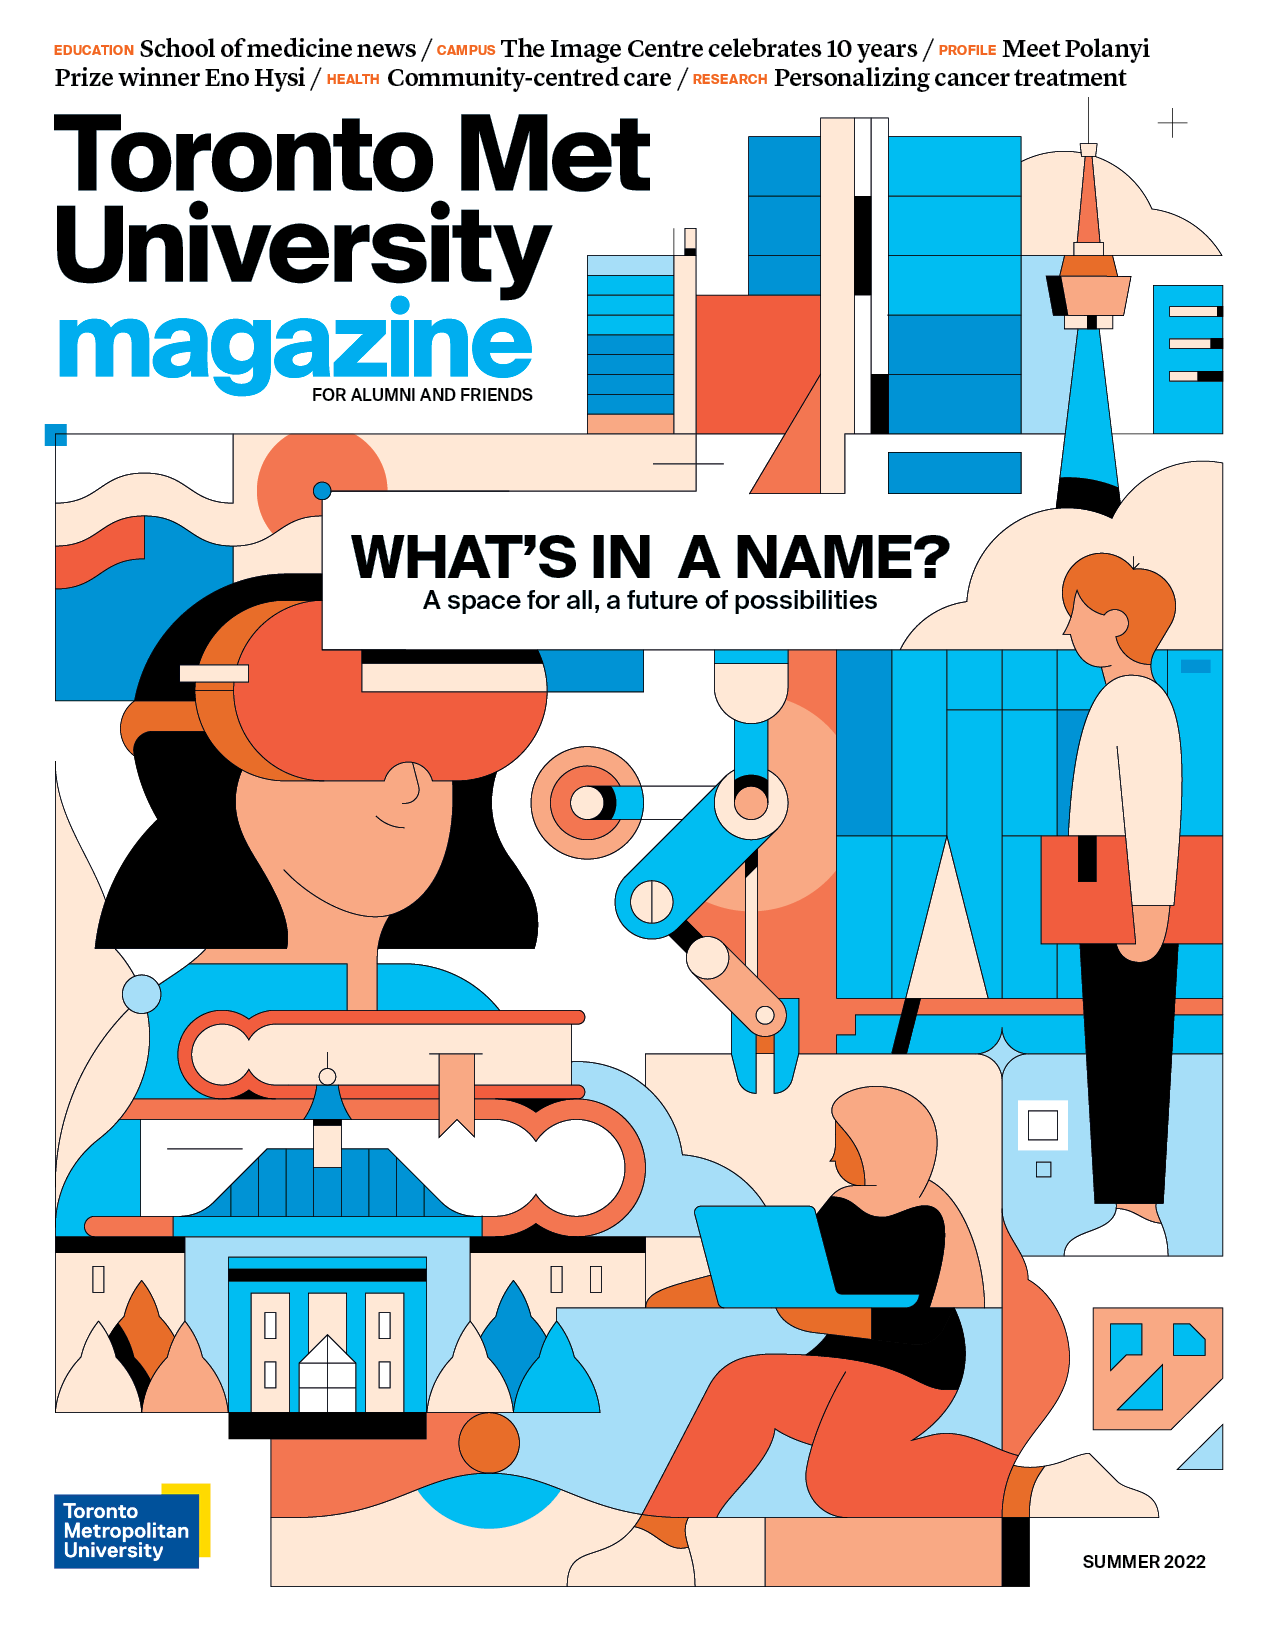 Toronto Met University magazine summer 2022 cover.